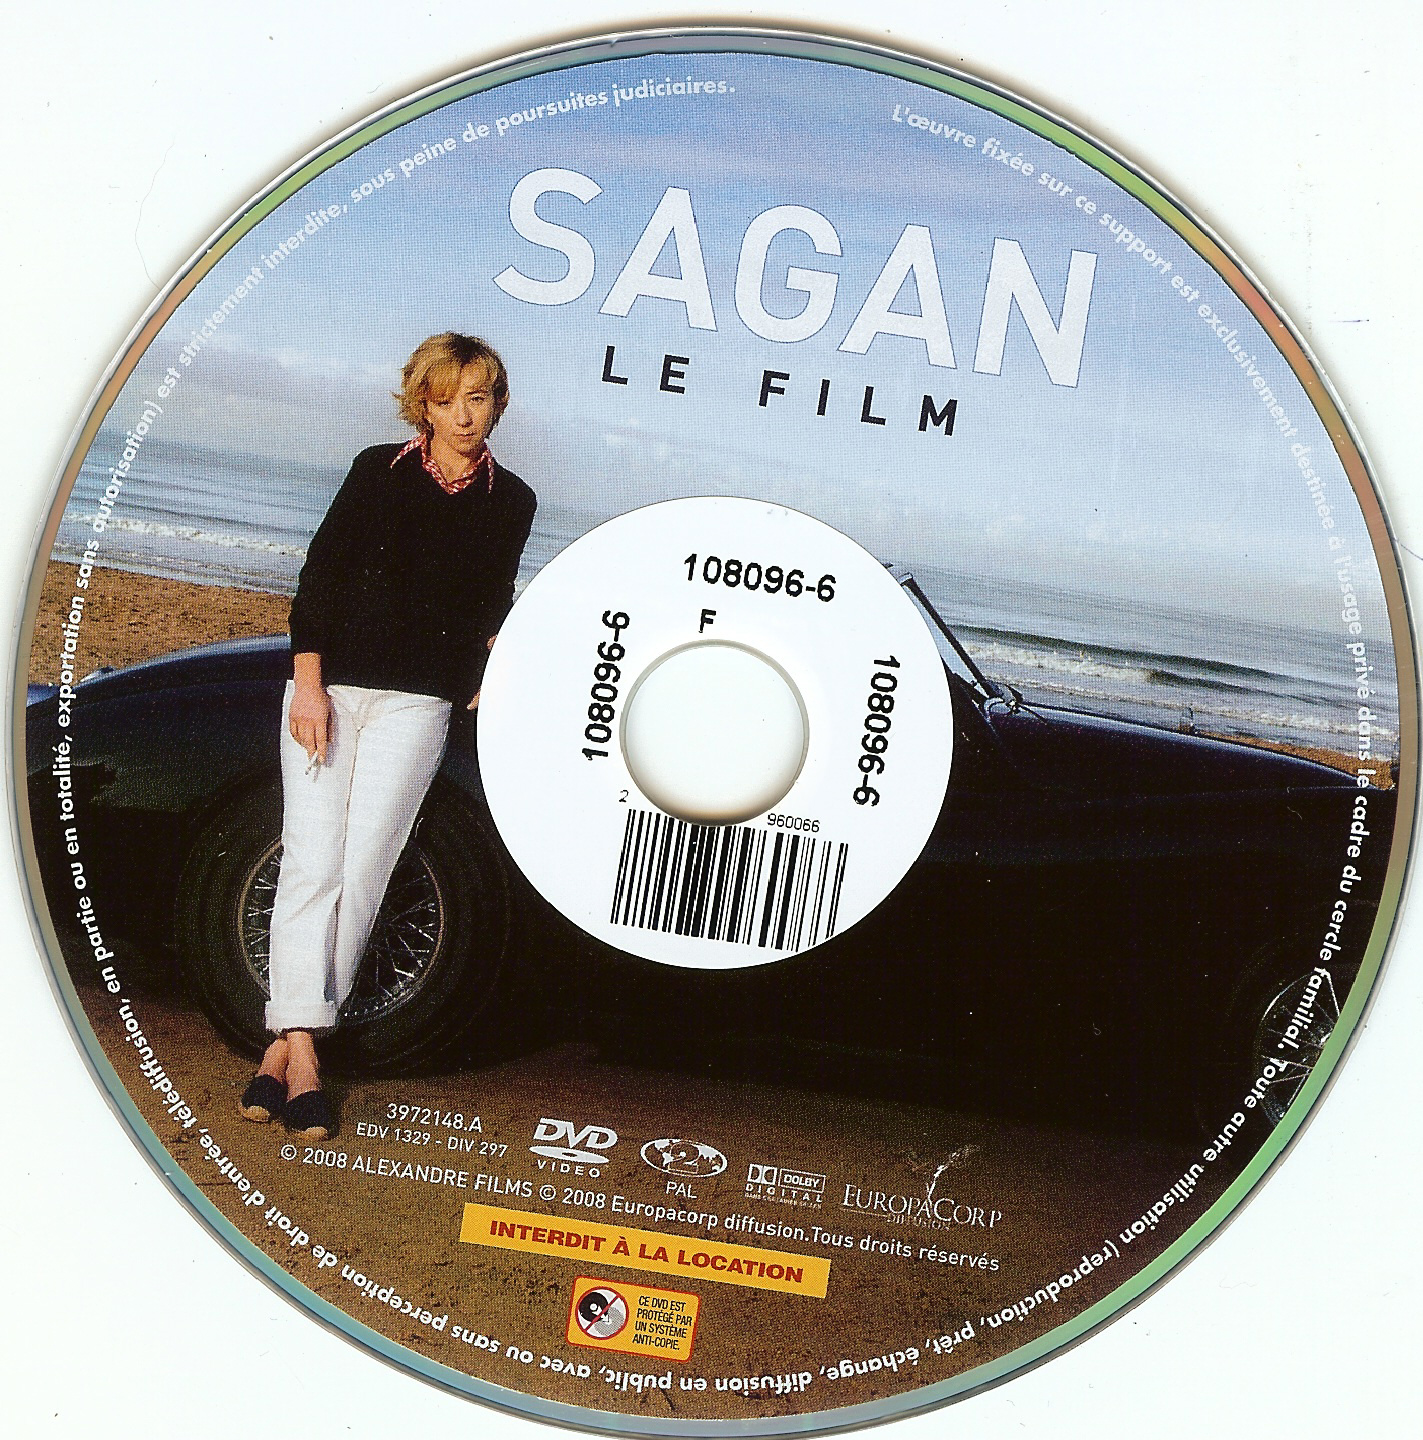 Sagan Le film